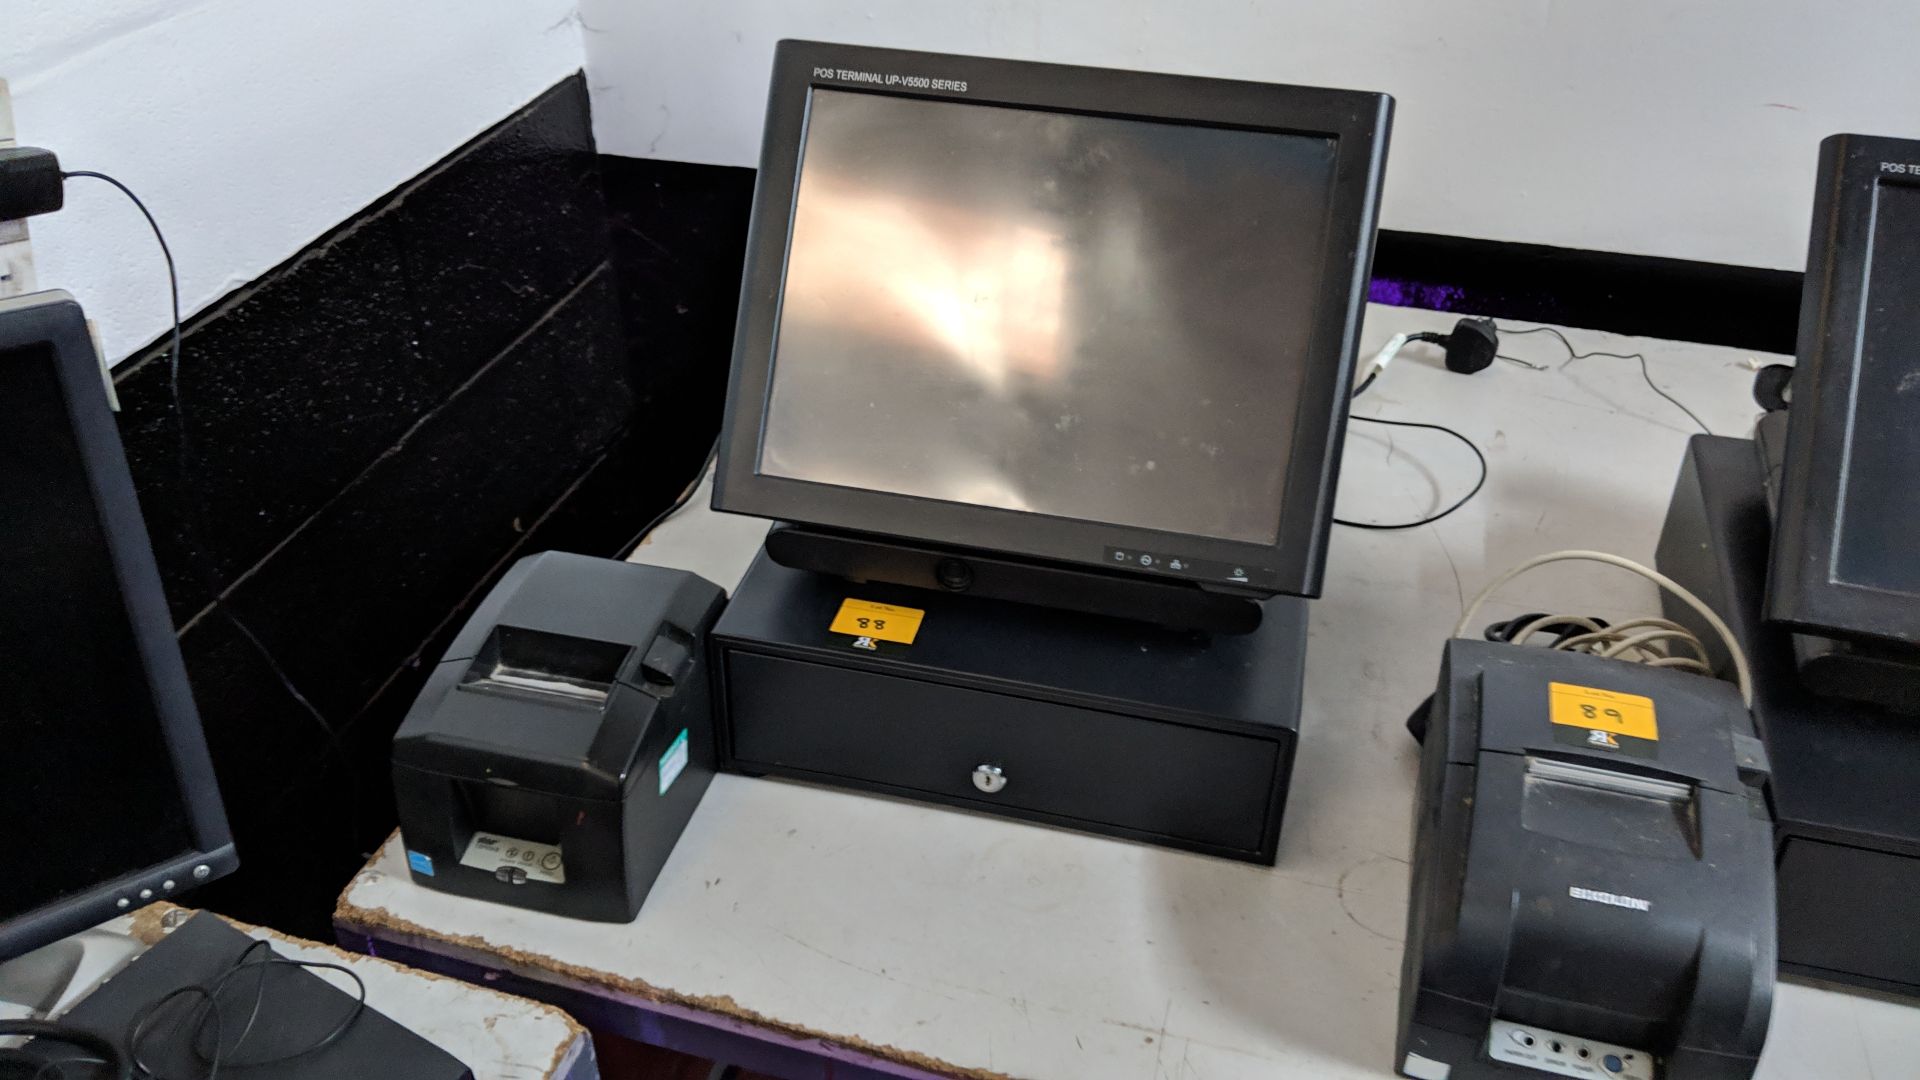 EPOS terminal UP-V5500 including cash drawer plus thermal receipt printer Lots 80 - 95 & 168 - 249